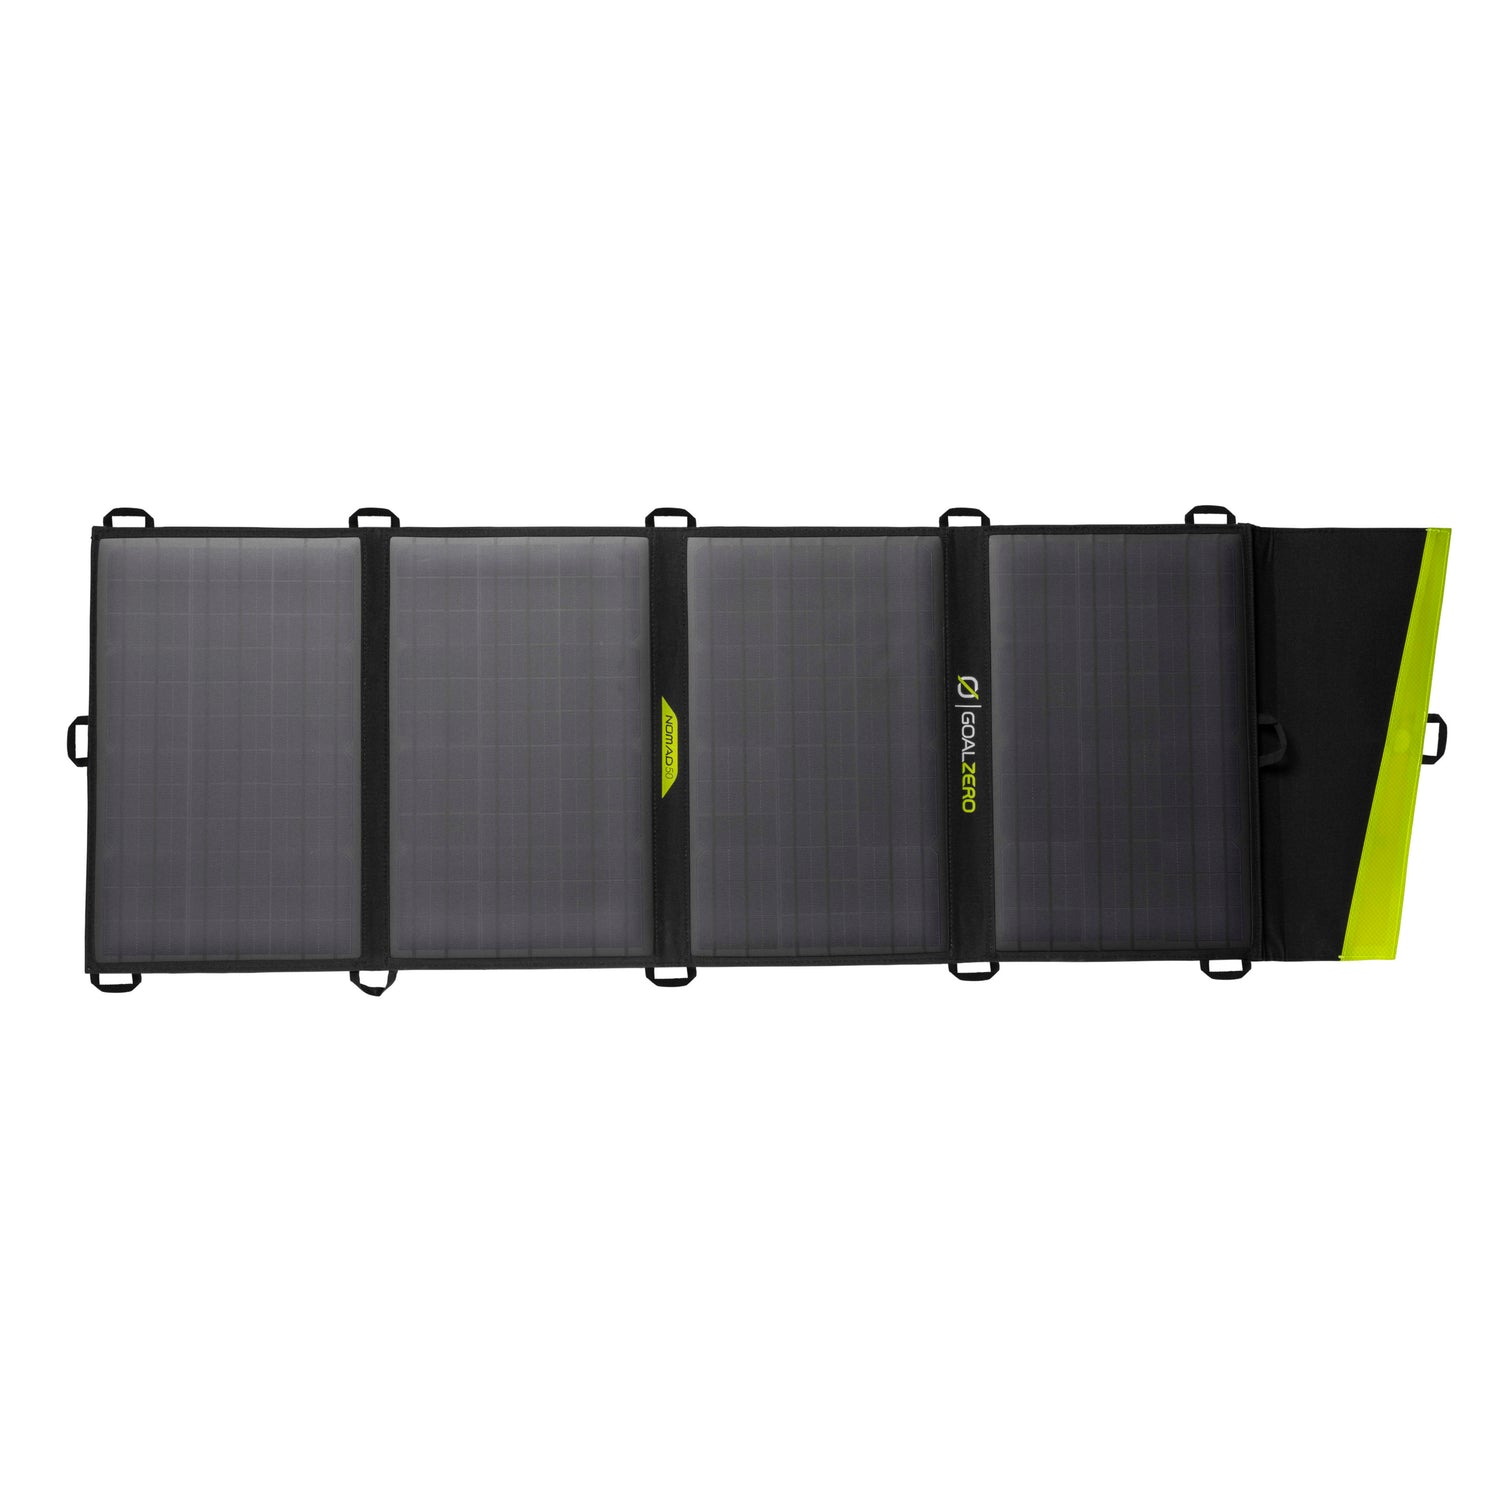 Goalzero Nomad 50 Solar Panel